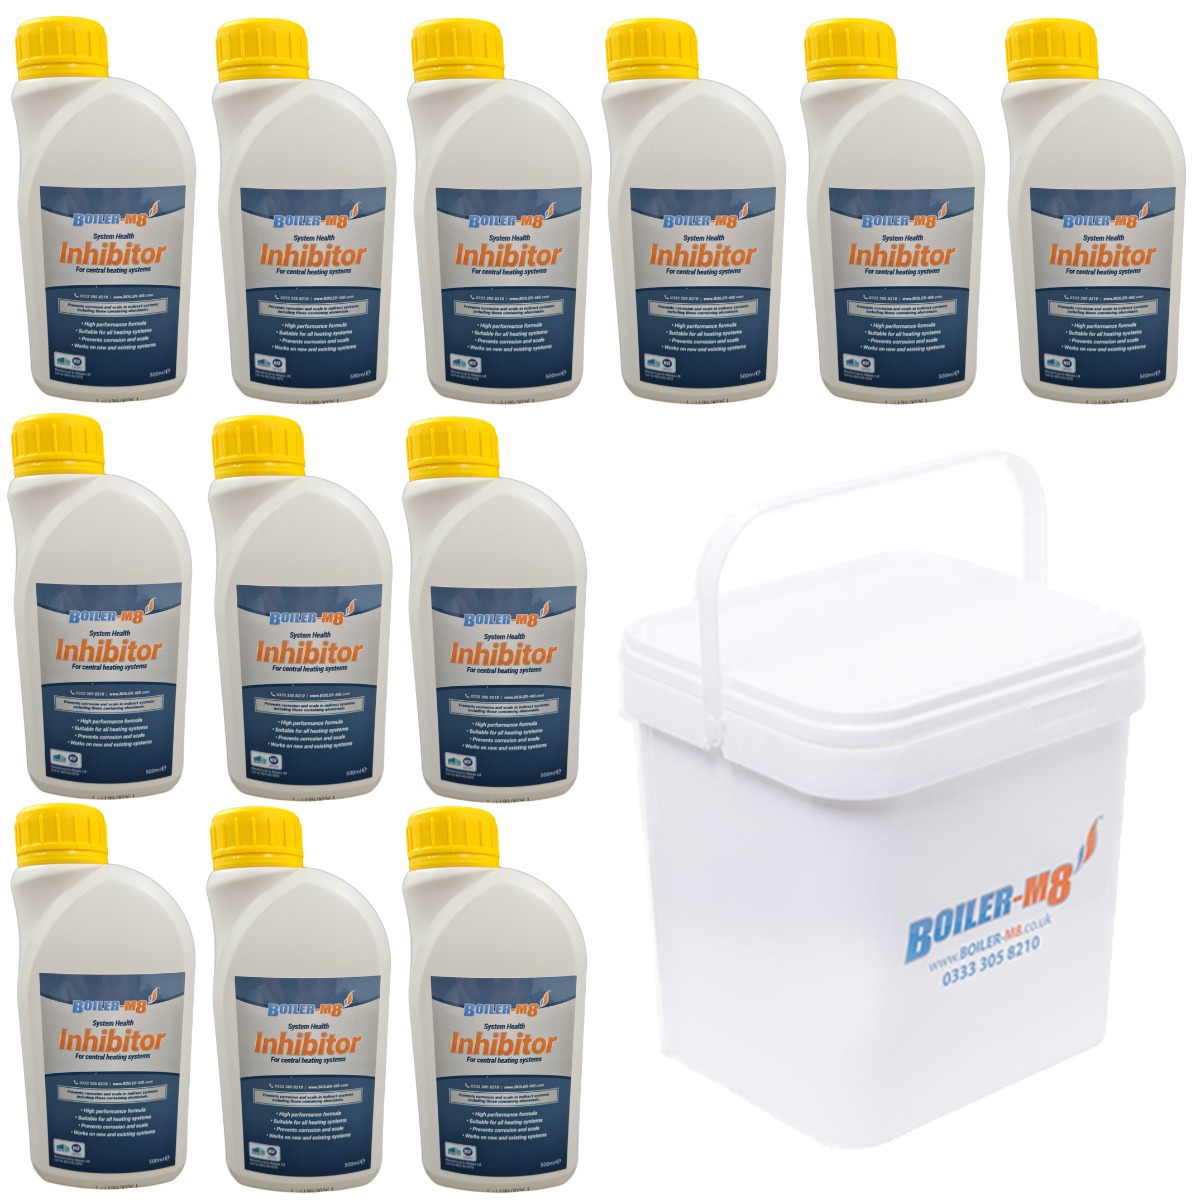 Boiler-m8 500ML Buildcert NSF System Health Inhibitor - Trade Pack of 12